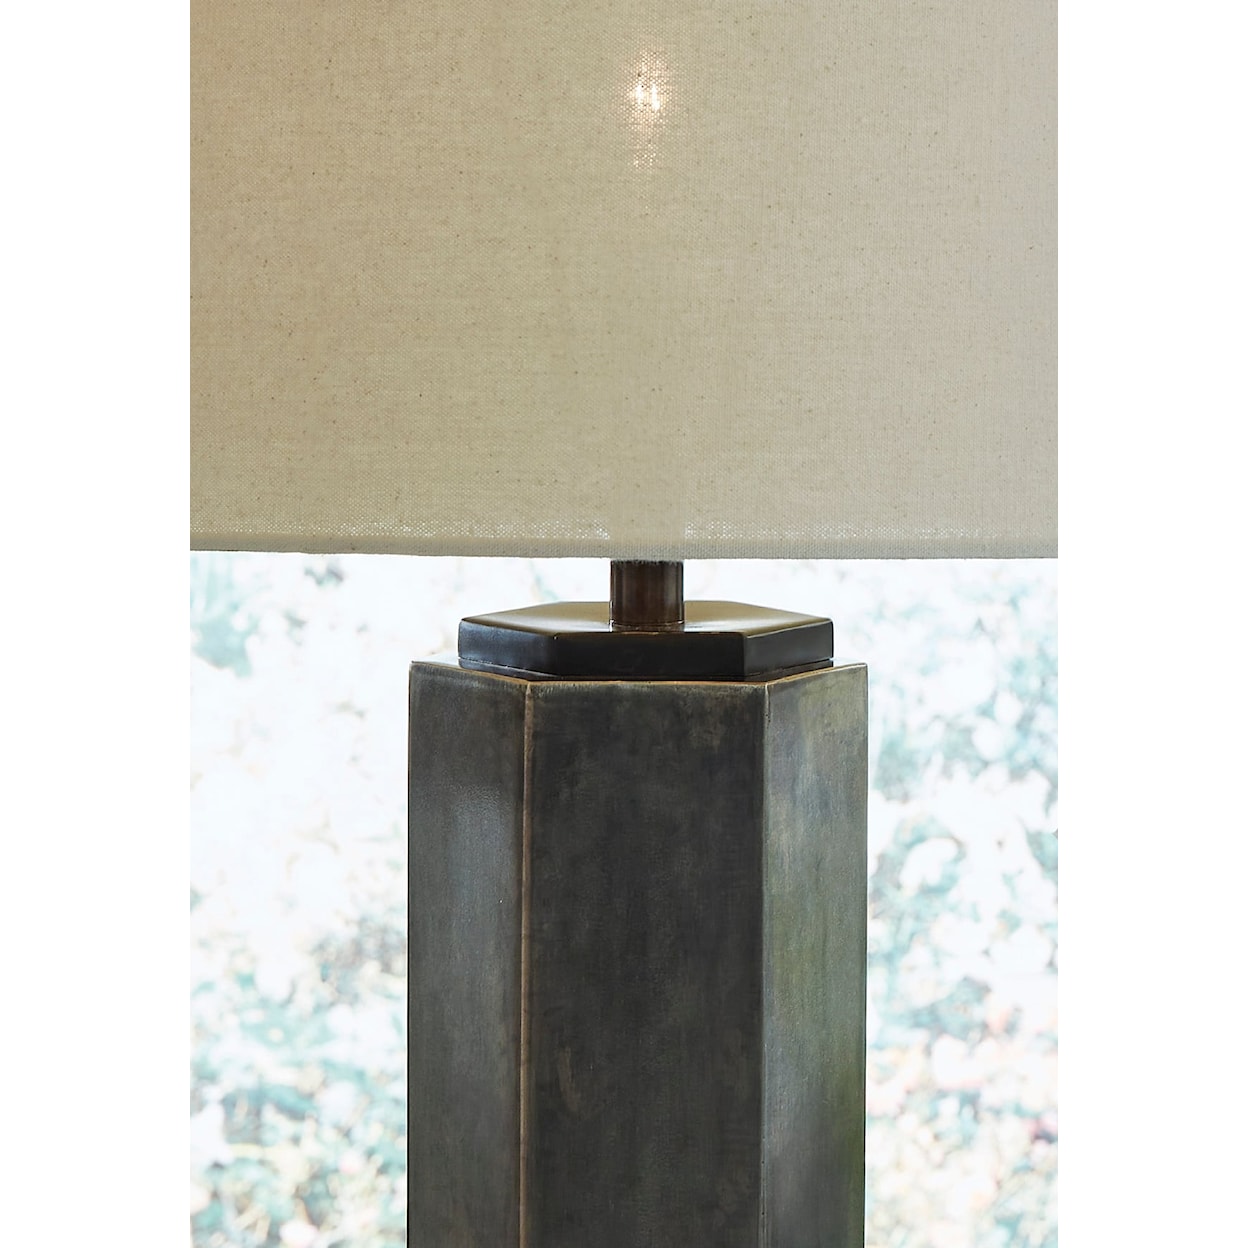 Signature Lamps - Contemporary Dirkton Table Lamp